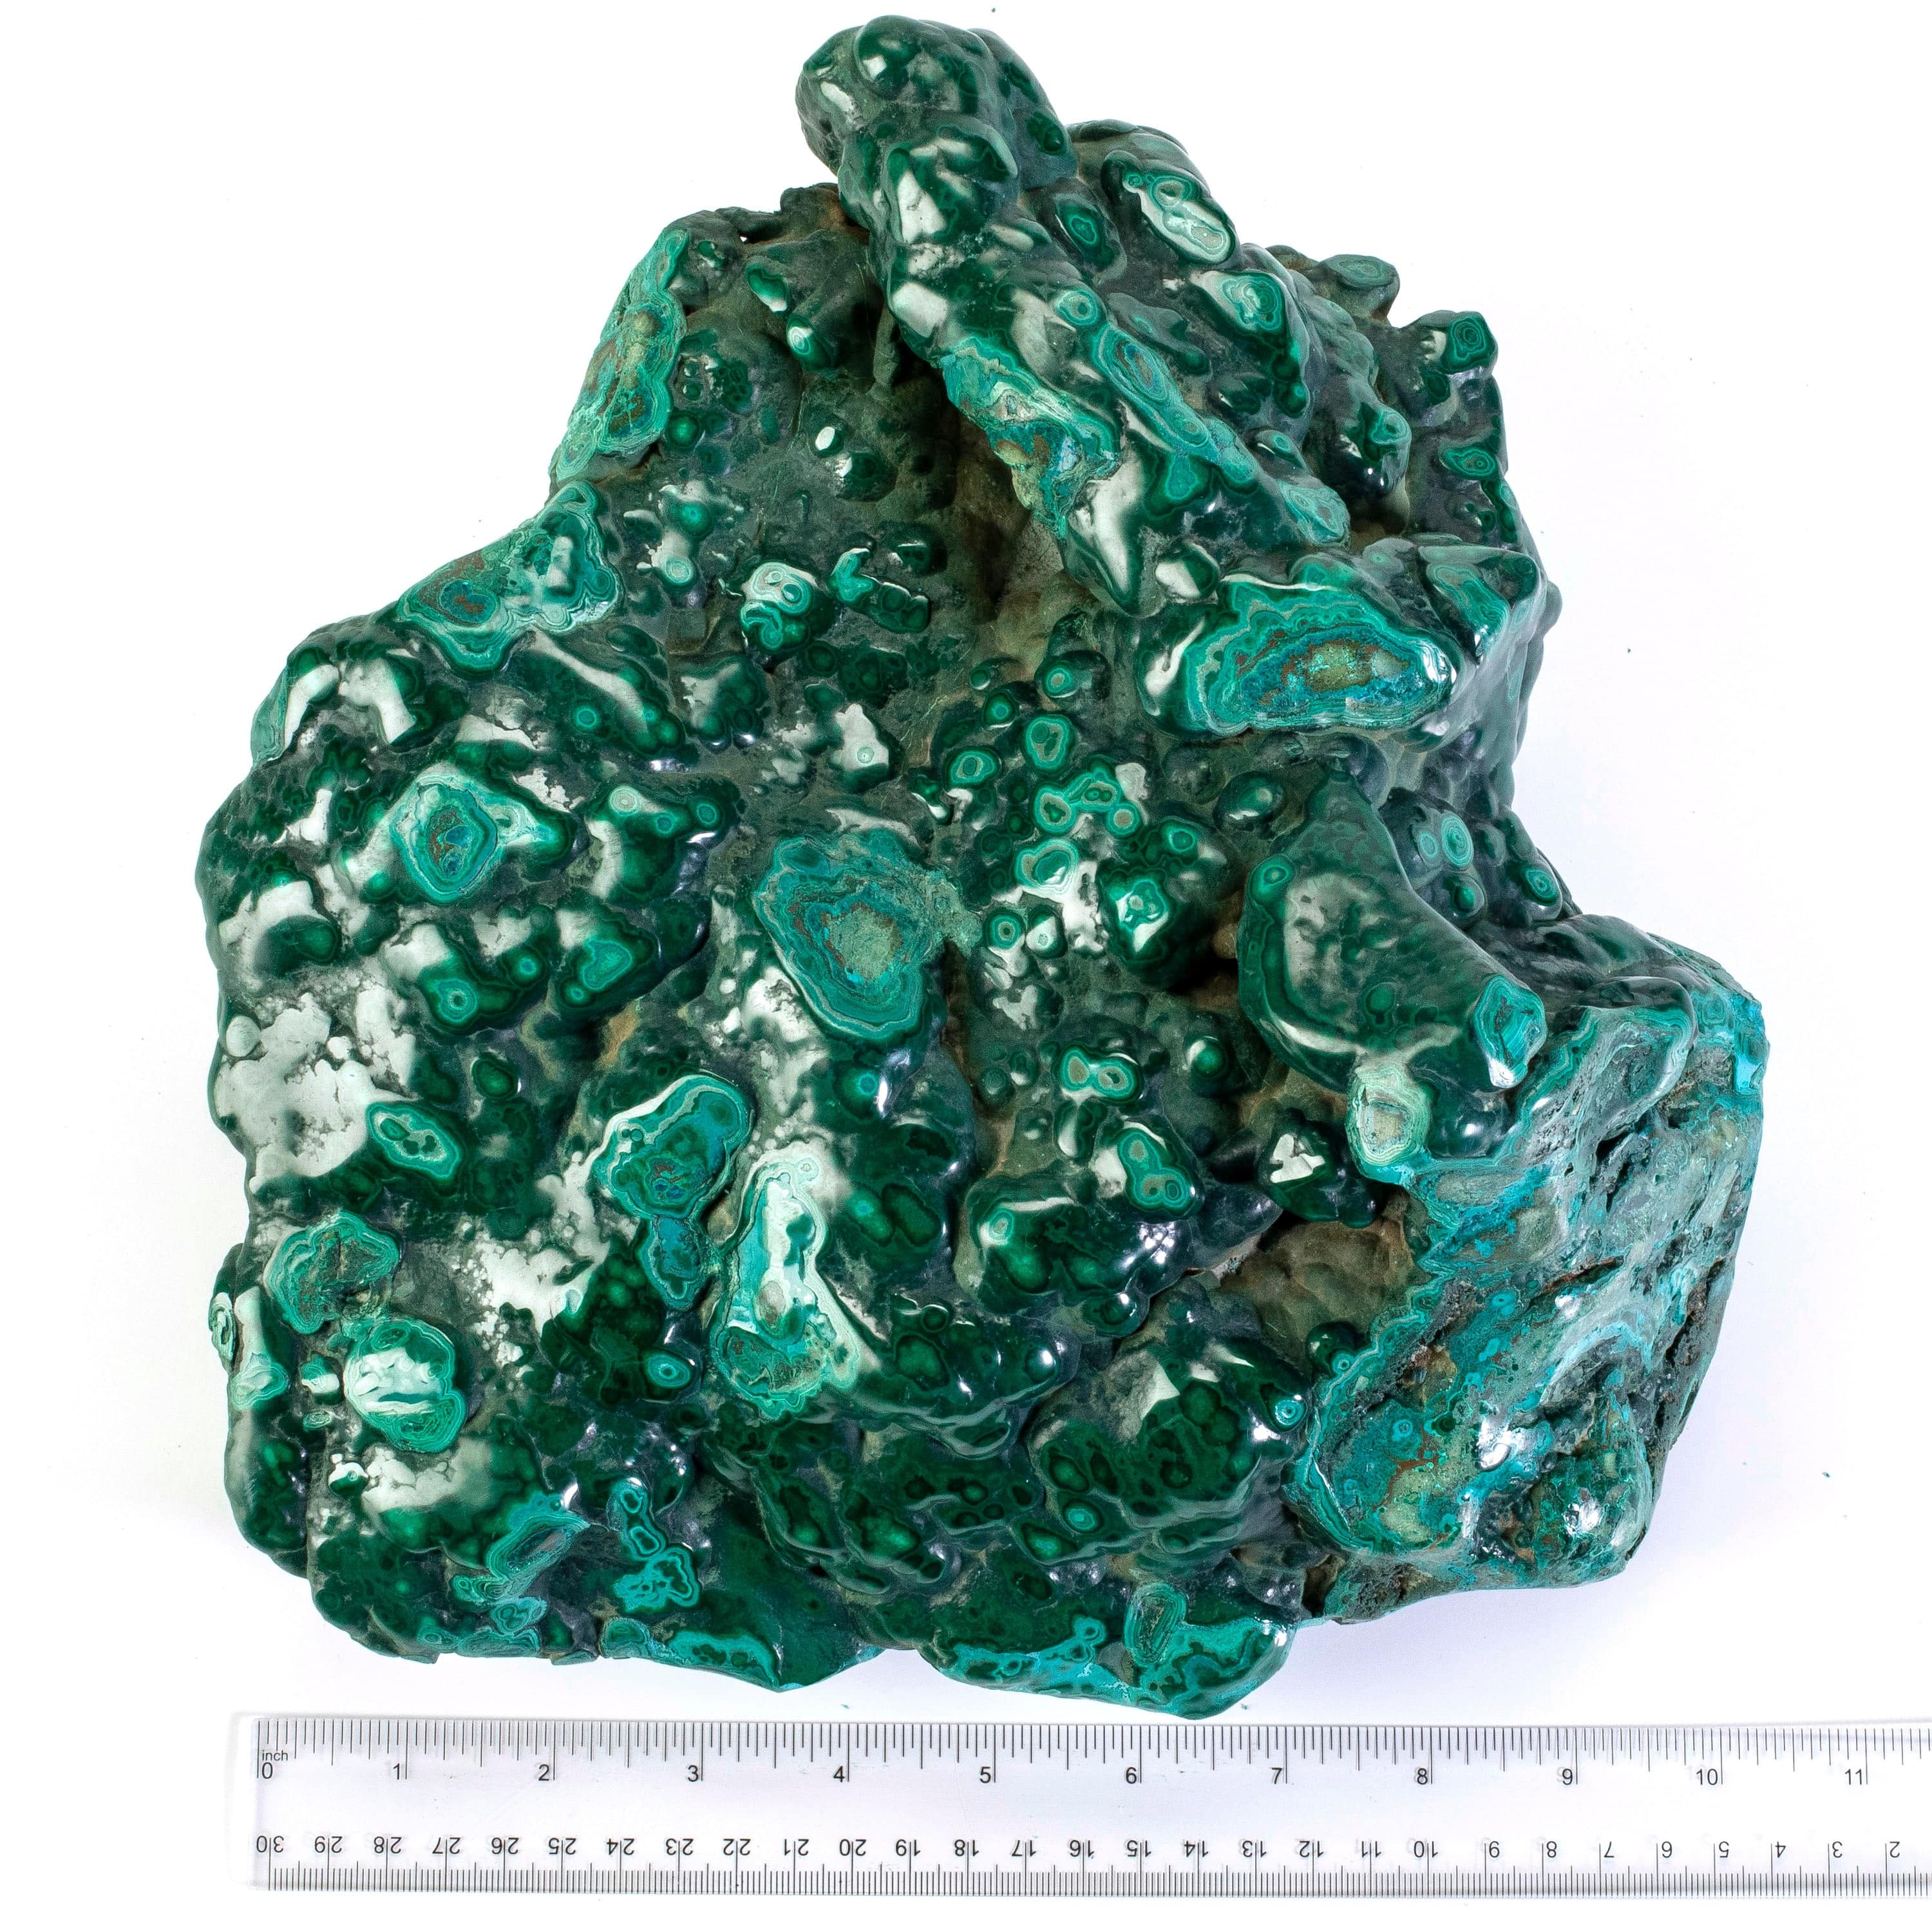 Kalifano Malachite Rare Natural Green Malachite with Blue Chrysocolla Freeform Specimen from Congo - 6.4 kg / 14 lbs MAC5600.001